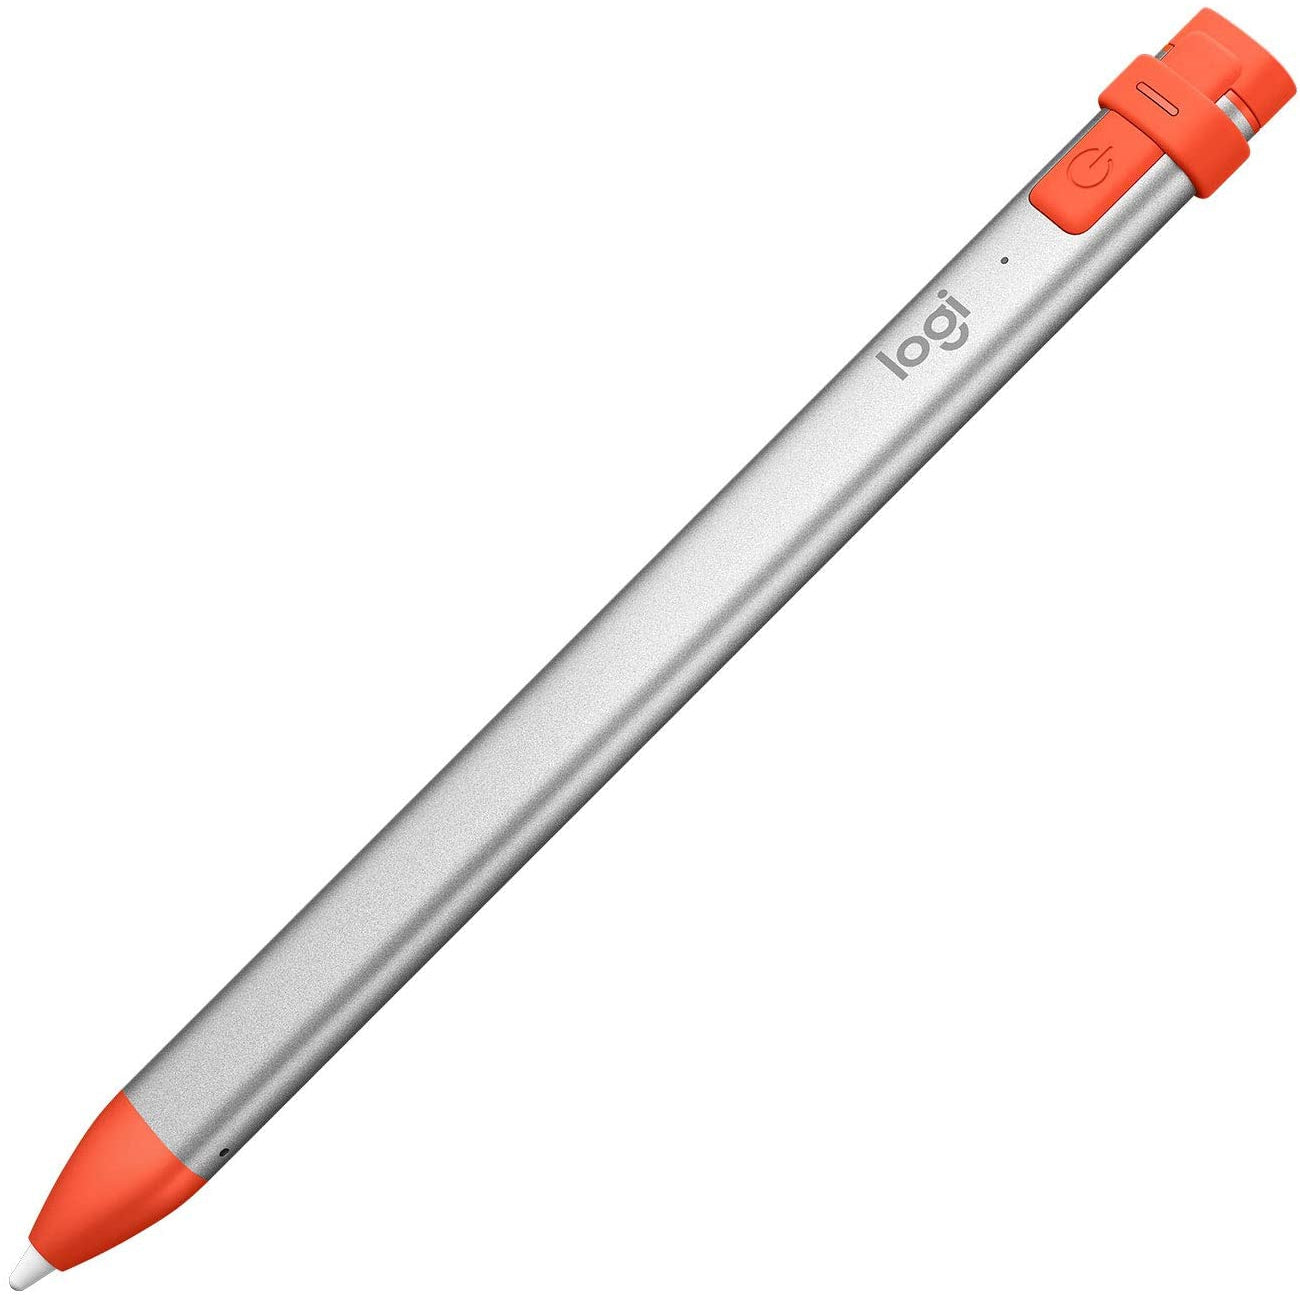 Logitech Crayon Digital Pencil - Silver / Orange - Refurbished Pristine